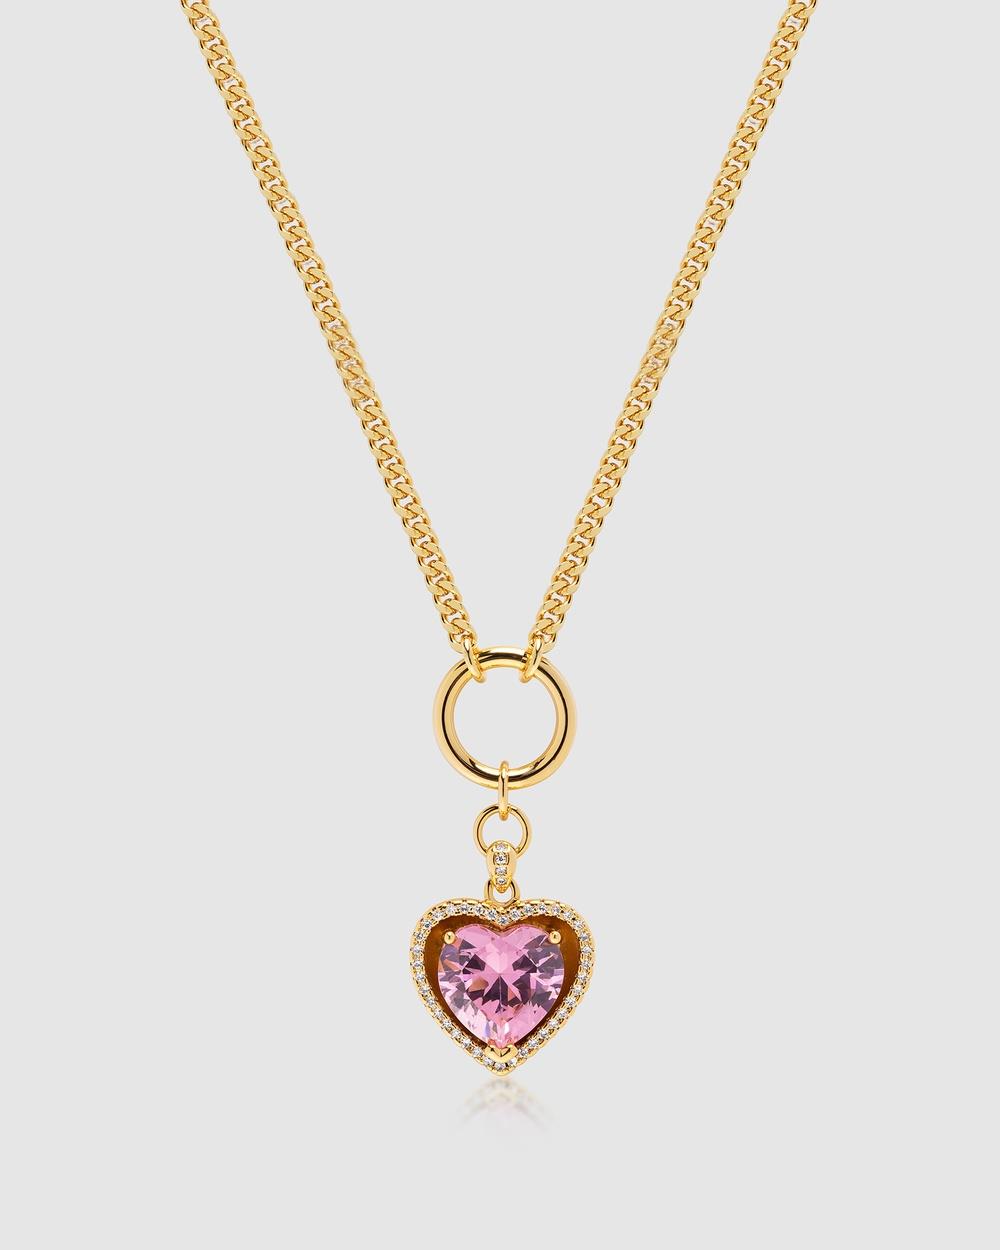 Nialaya Jewellery - Women's Necklace with Pink Cubic Zirconia Heart Pendant - Jewellery (PINK) Women's Necklace with Pink Cubic Zirconia Heart Pendant